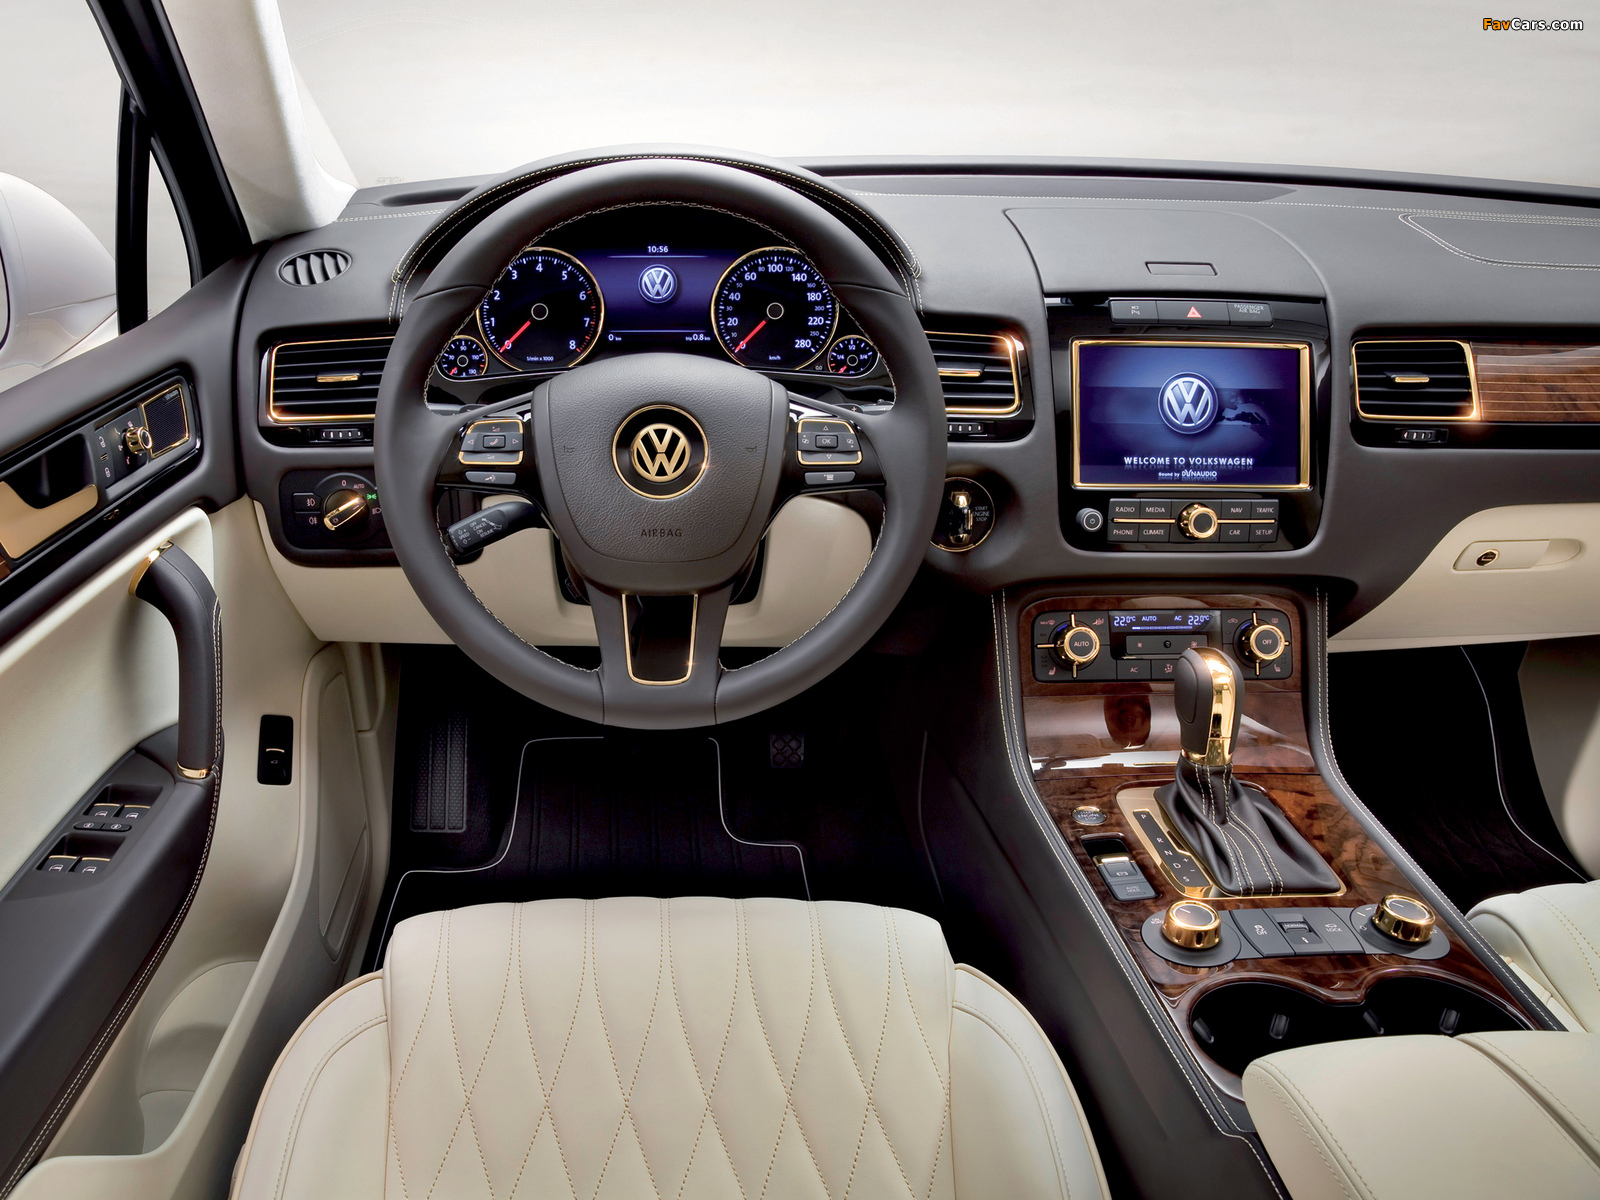 Volkswagen Touareg V8 TDI Gold Edition Concept 2011 images (1600 x 1200)